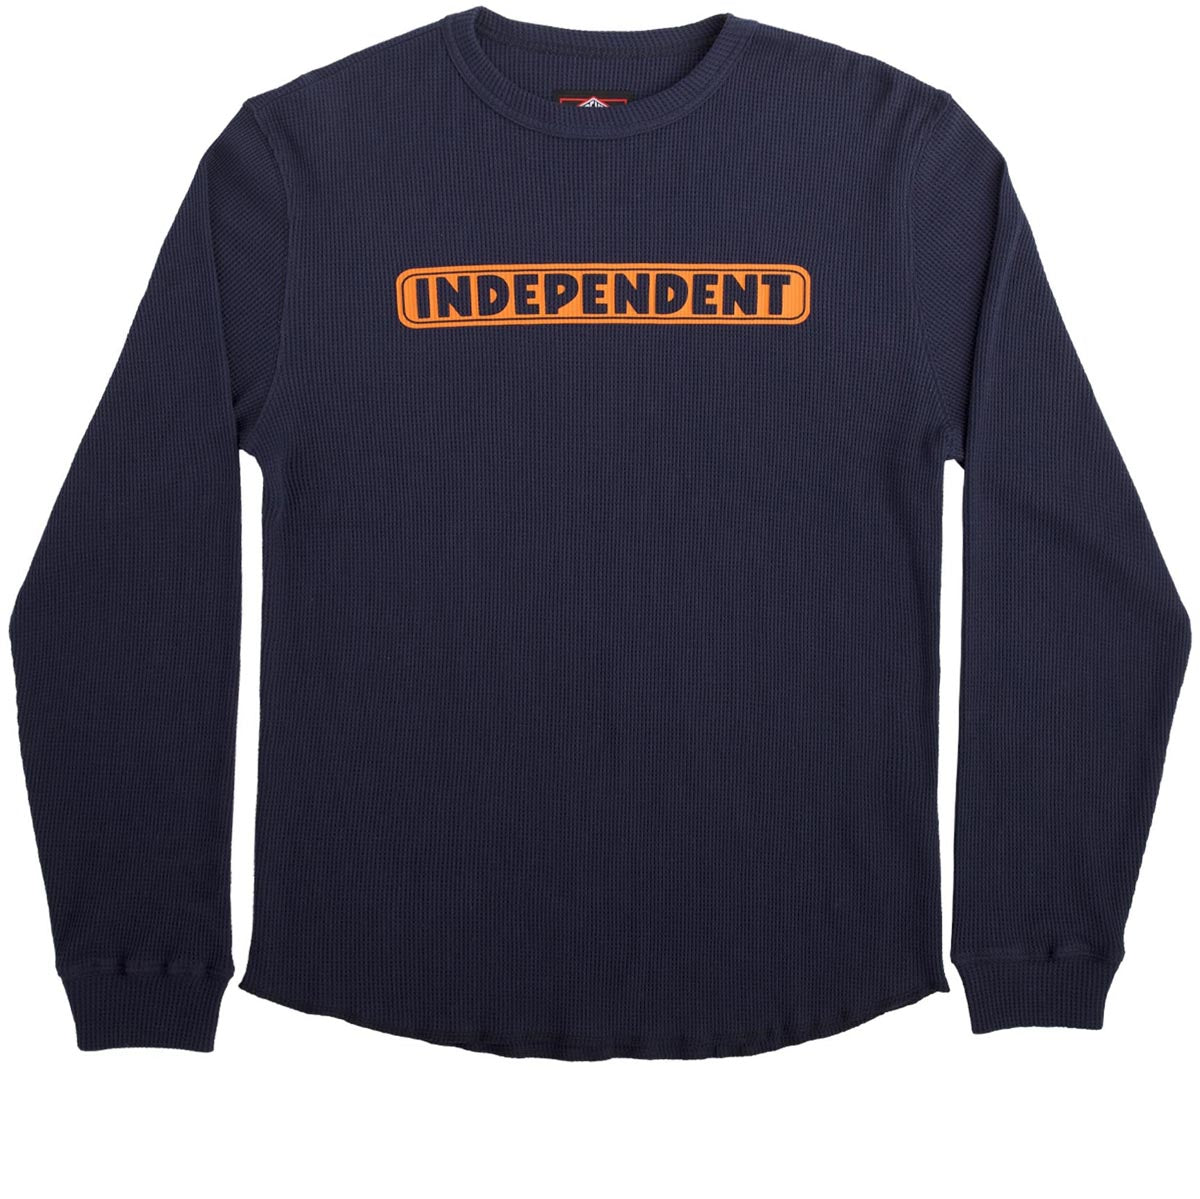 Independent Bar Logo Thermal Long Sleeve Shirt - Navy image 1